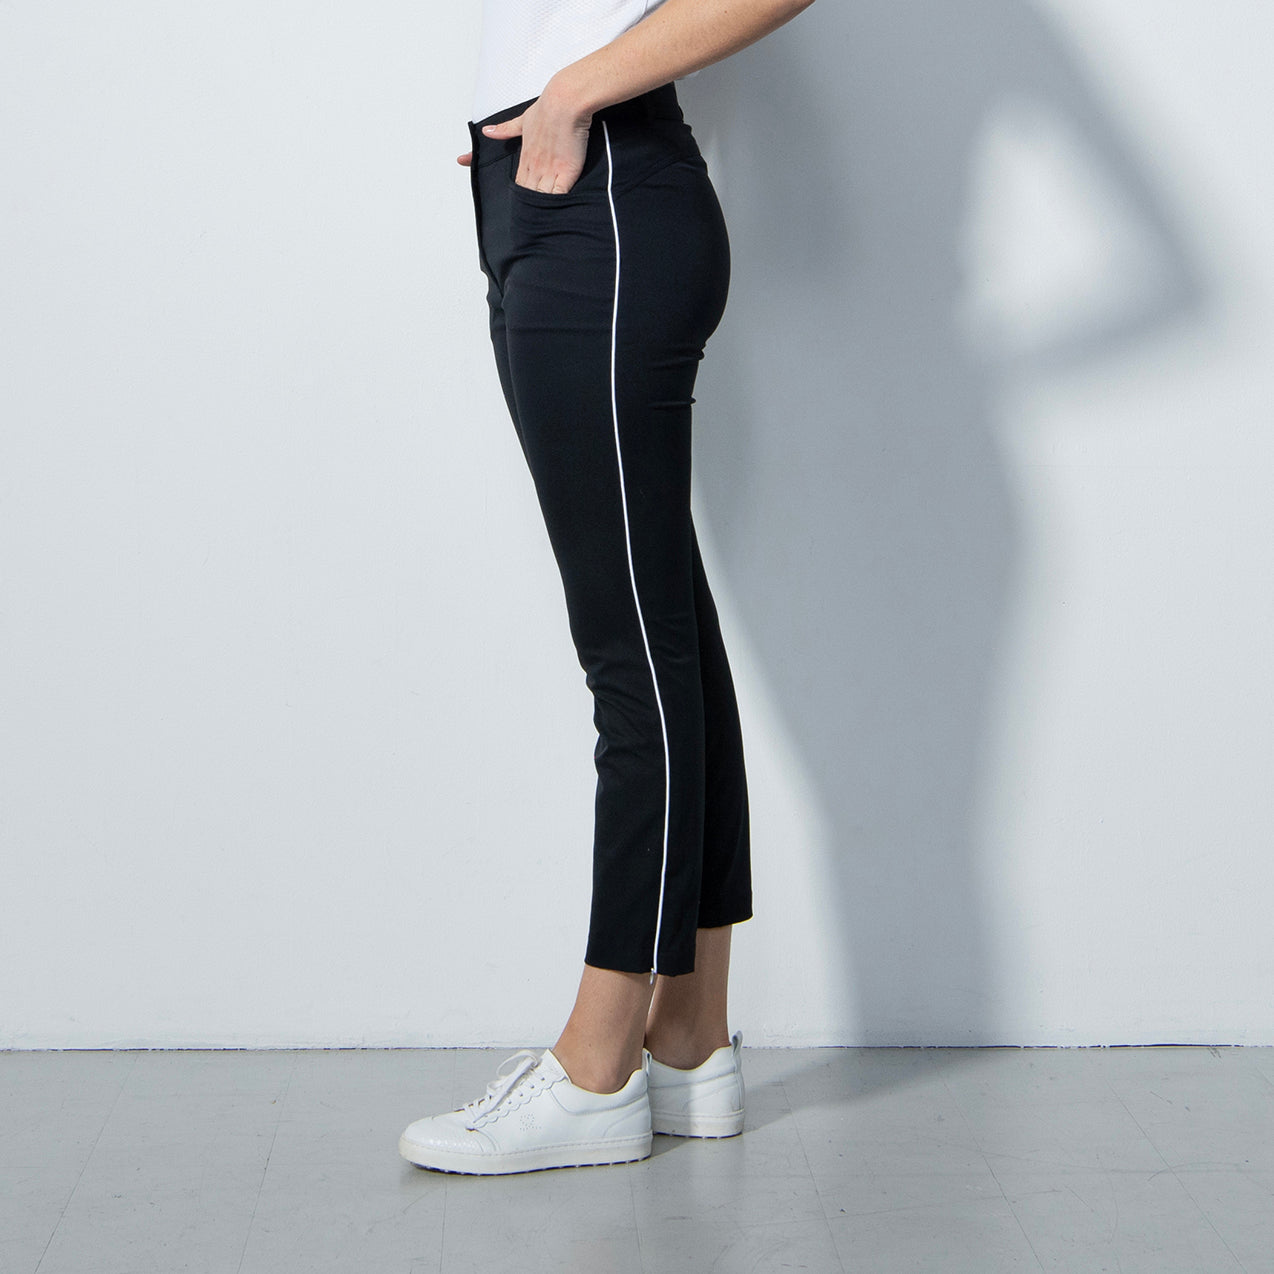 Black sports trousers for women - PUMA - Pavidas